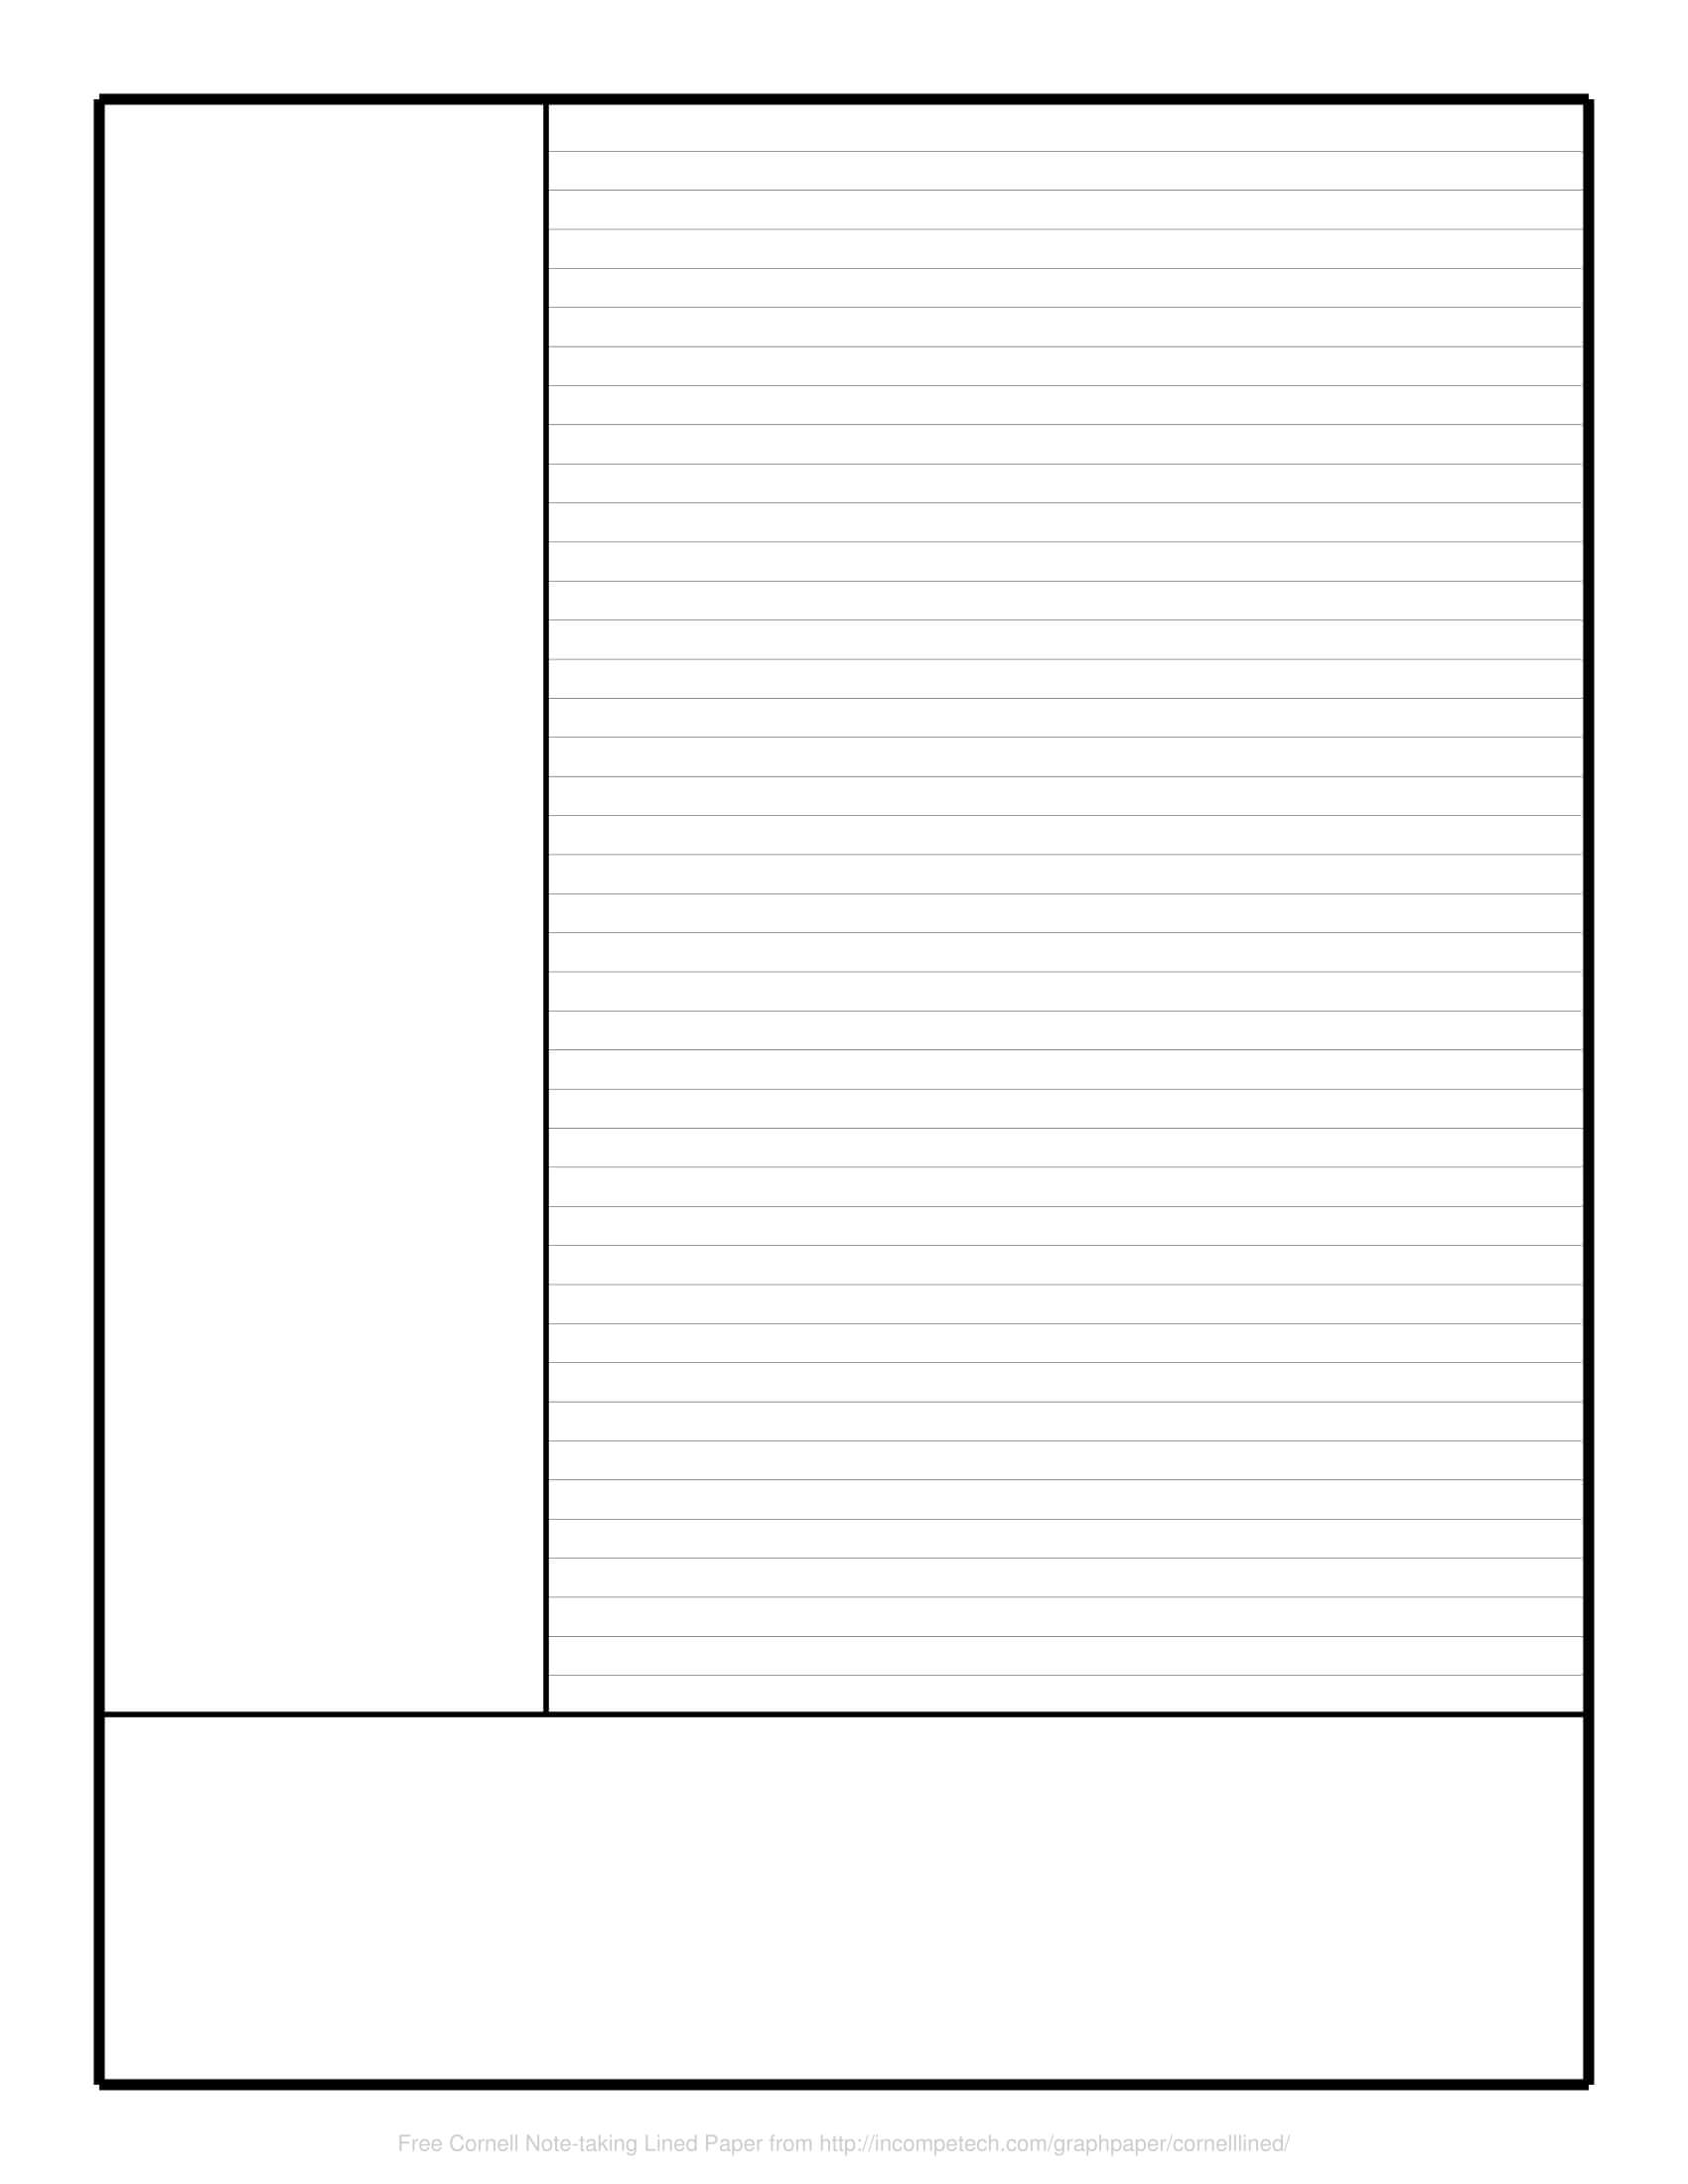 free-printable-note-taking-templates-pdf-free-9-cornell-note-taking-vrogue